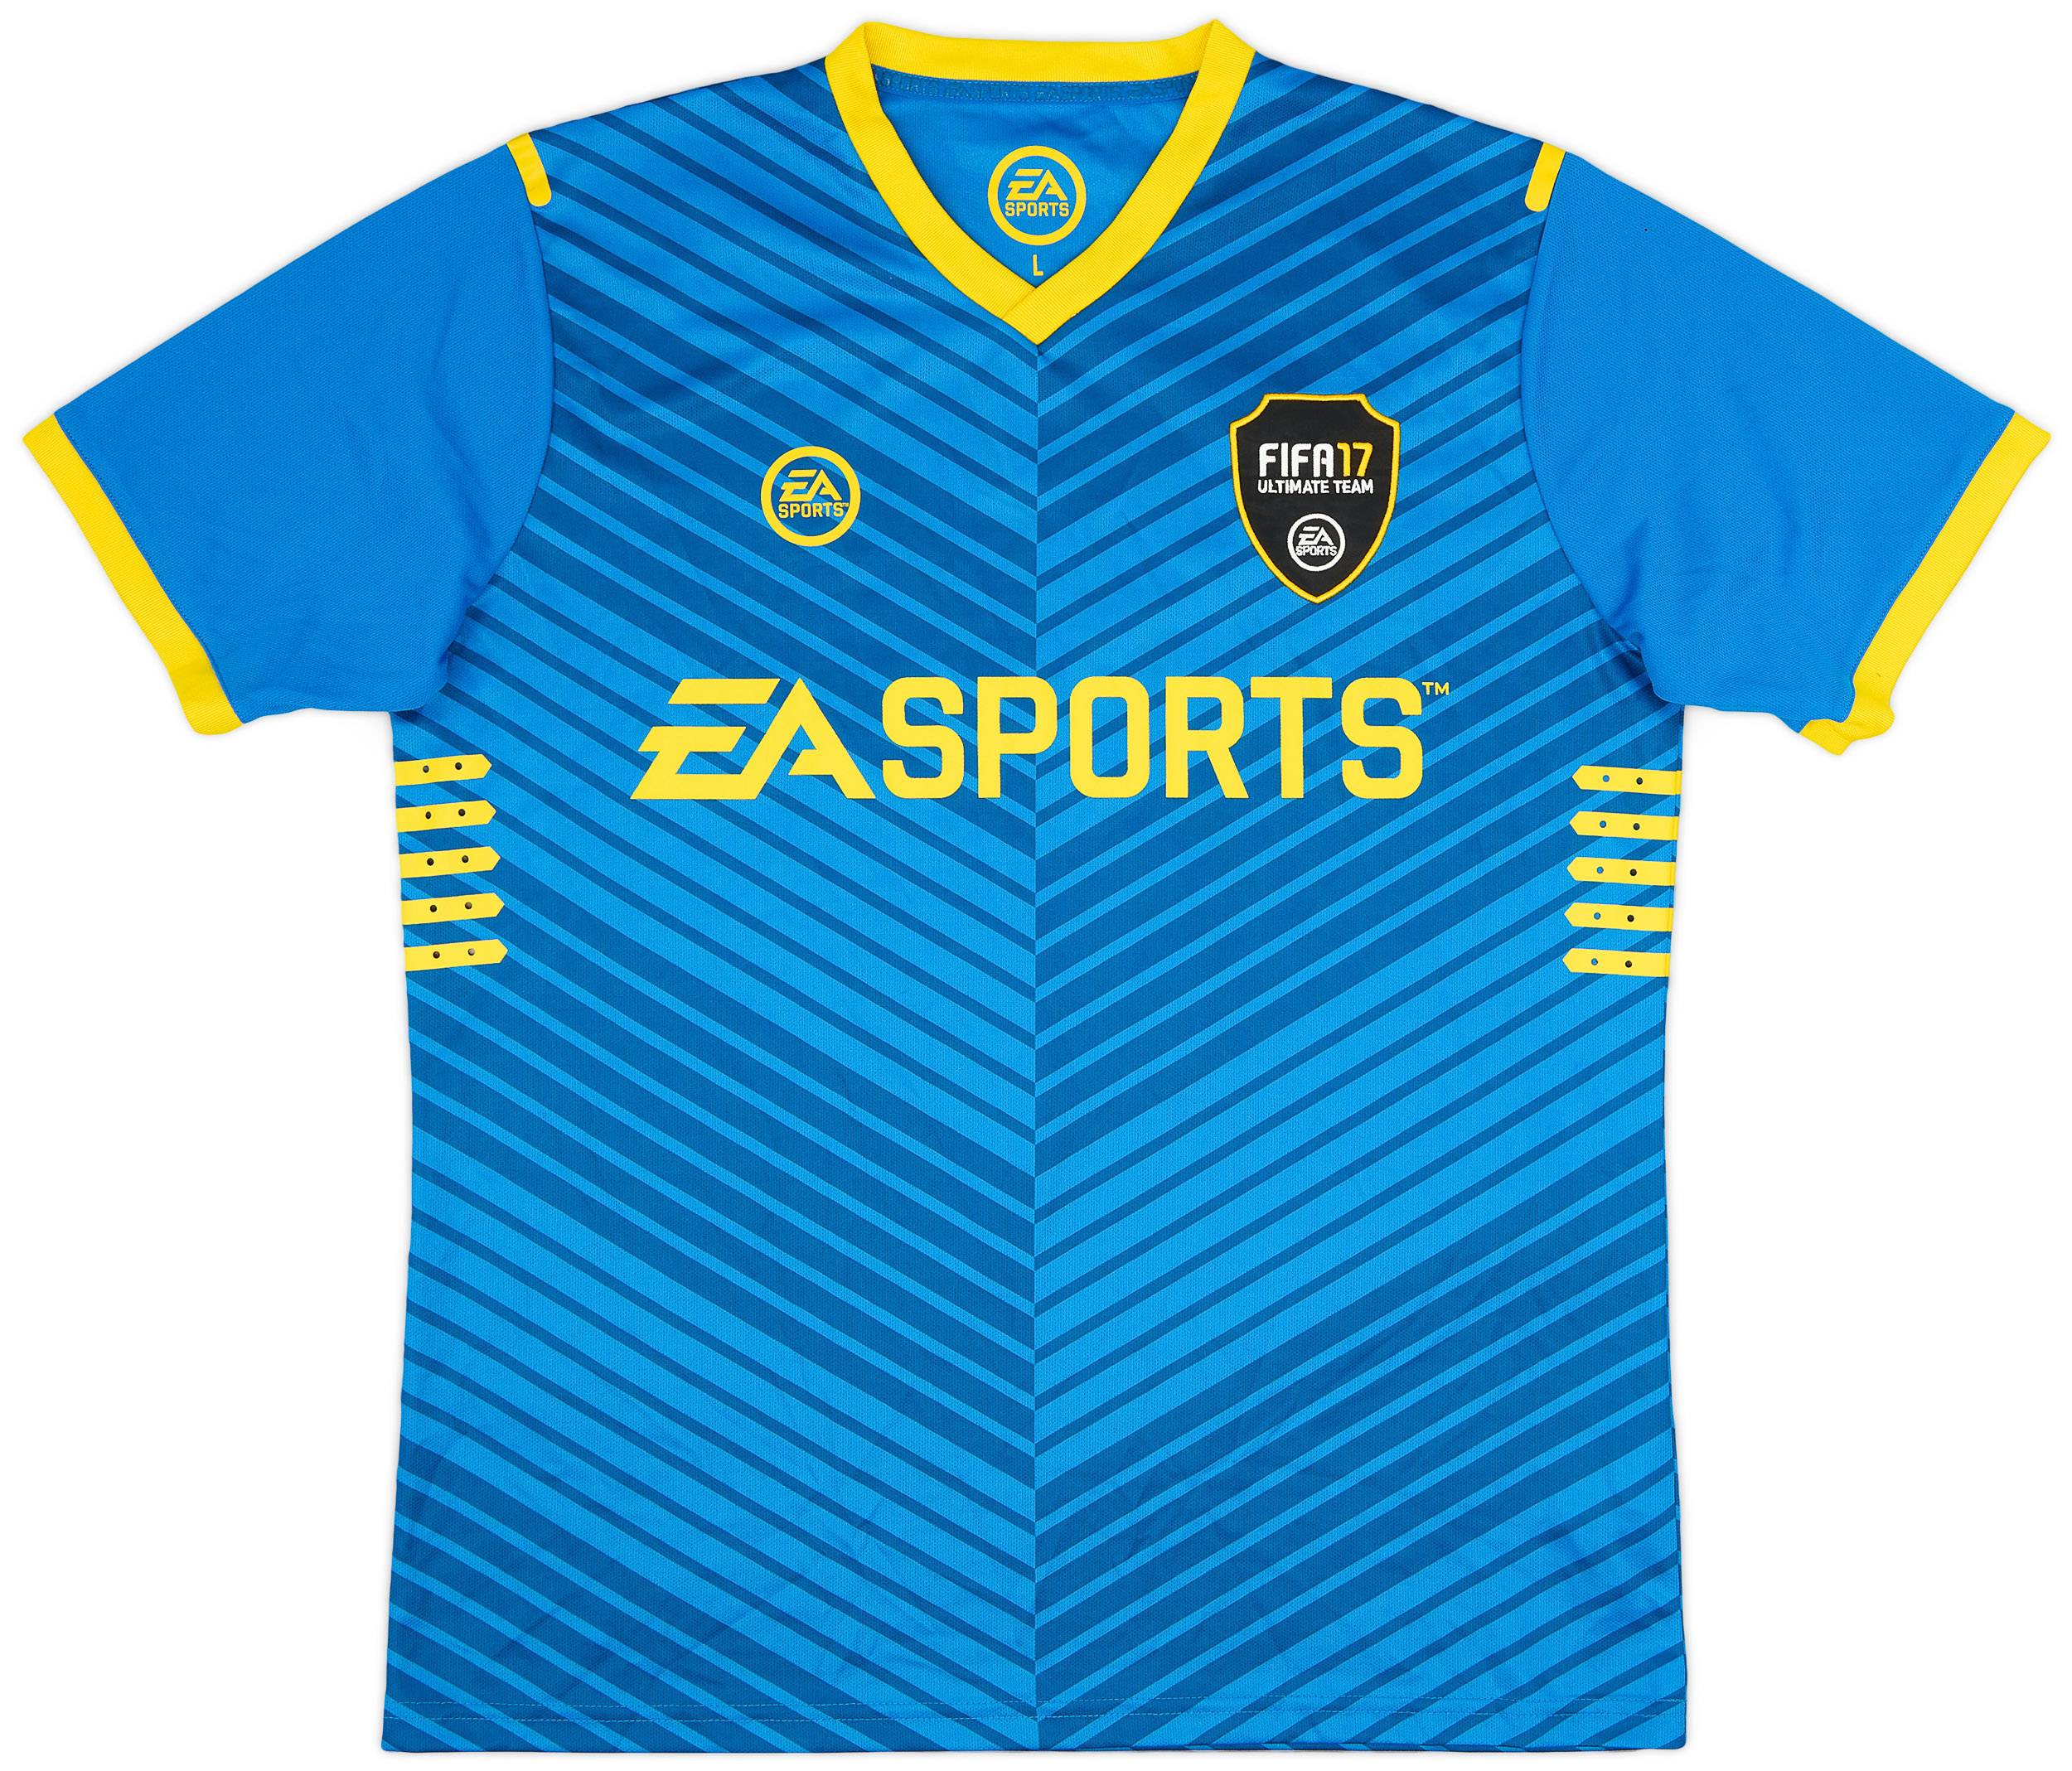 2017 EA Sports FIFA Ultimate Team Shirt #17 - 9/10 - (L)